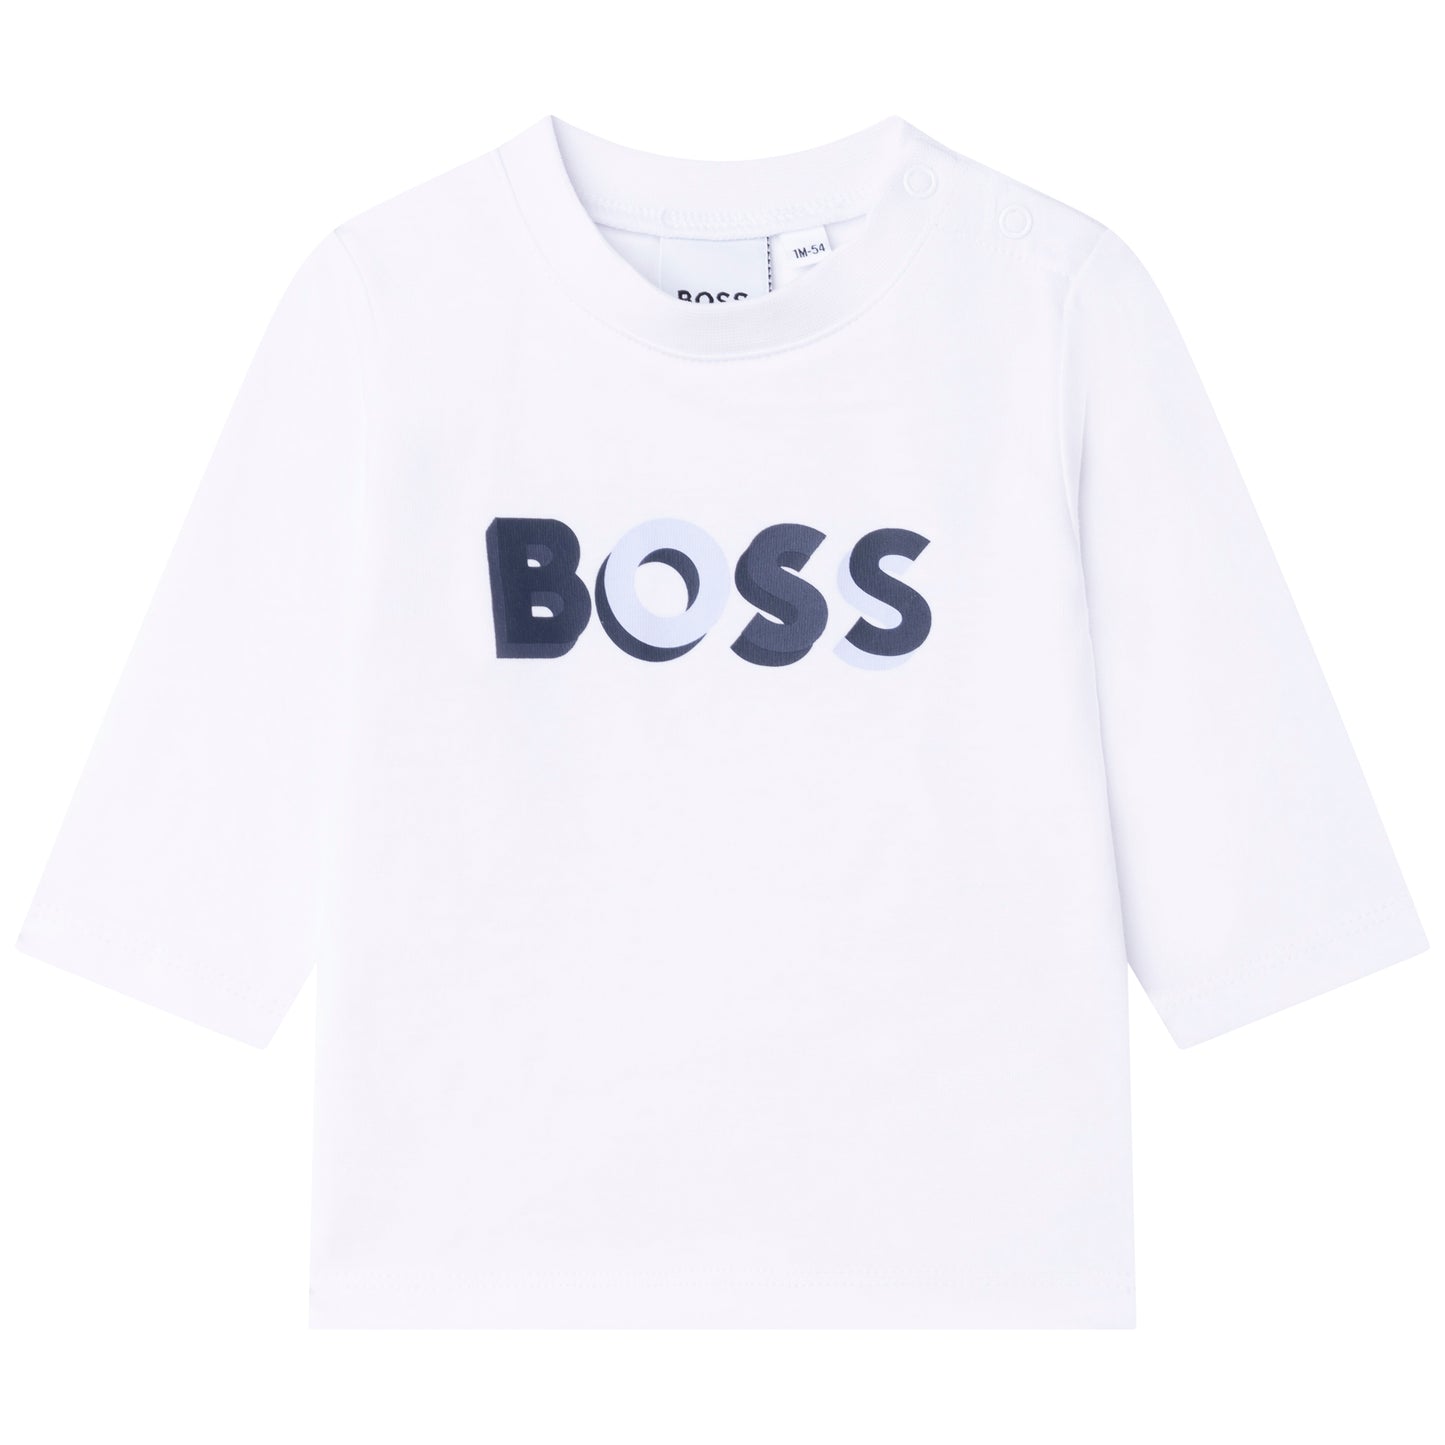 Hugo Boss Baby T-Shirt & Track Suit Set _Pale Blue J98369-771